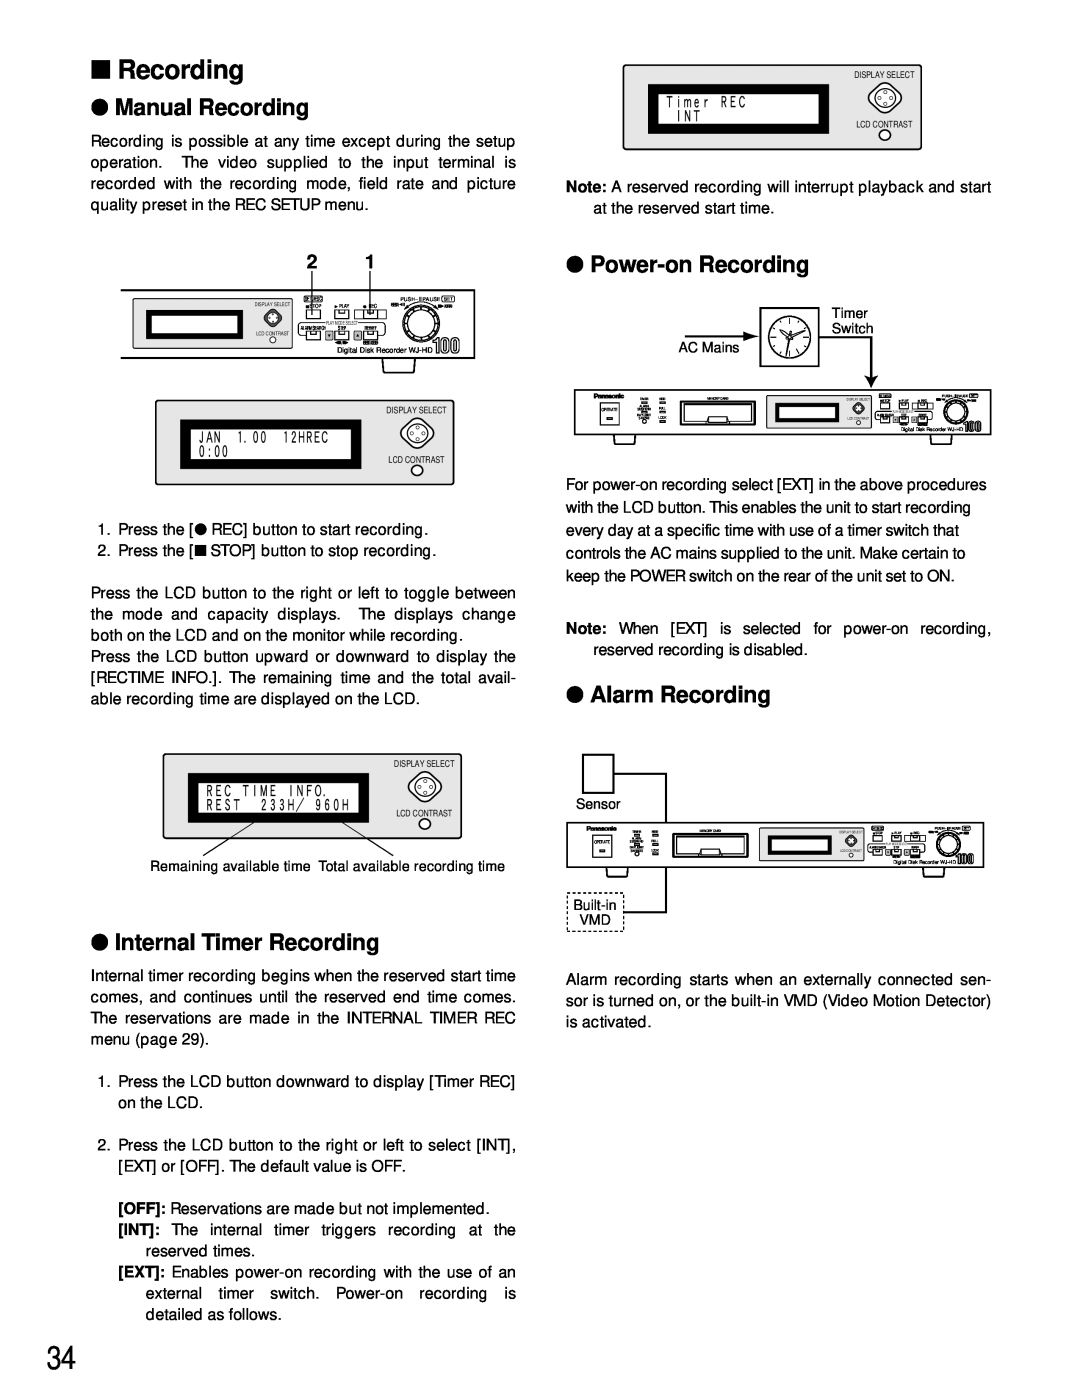 Panasonic WJ-HD100 Manual Recording, Internal Timer Recording, Power-onRecording, Alarm Recording 